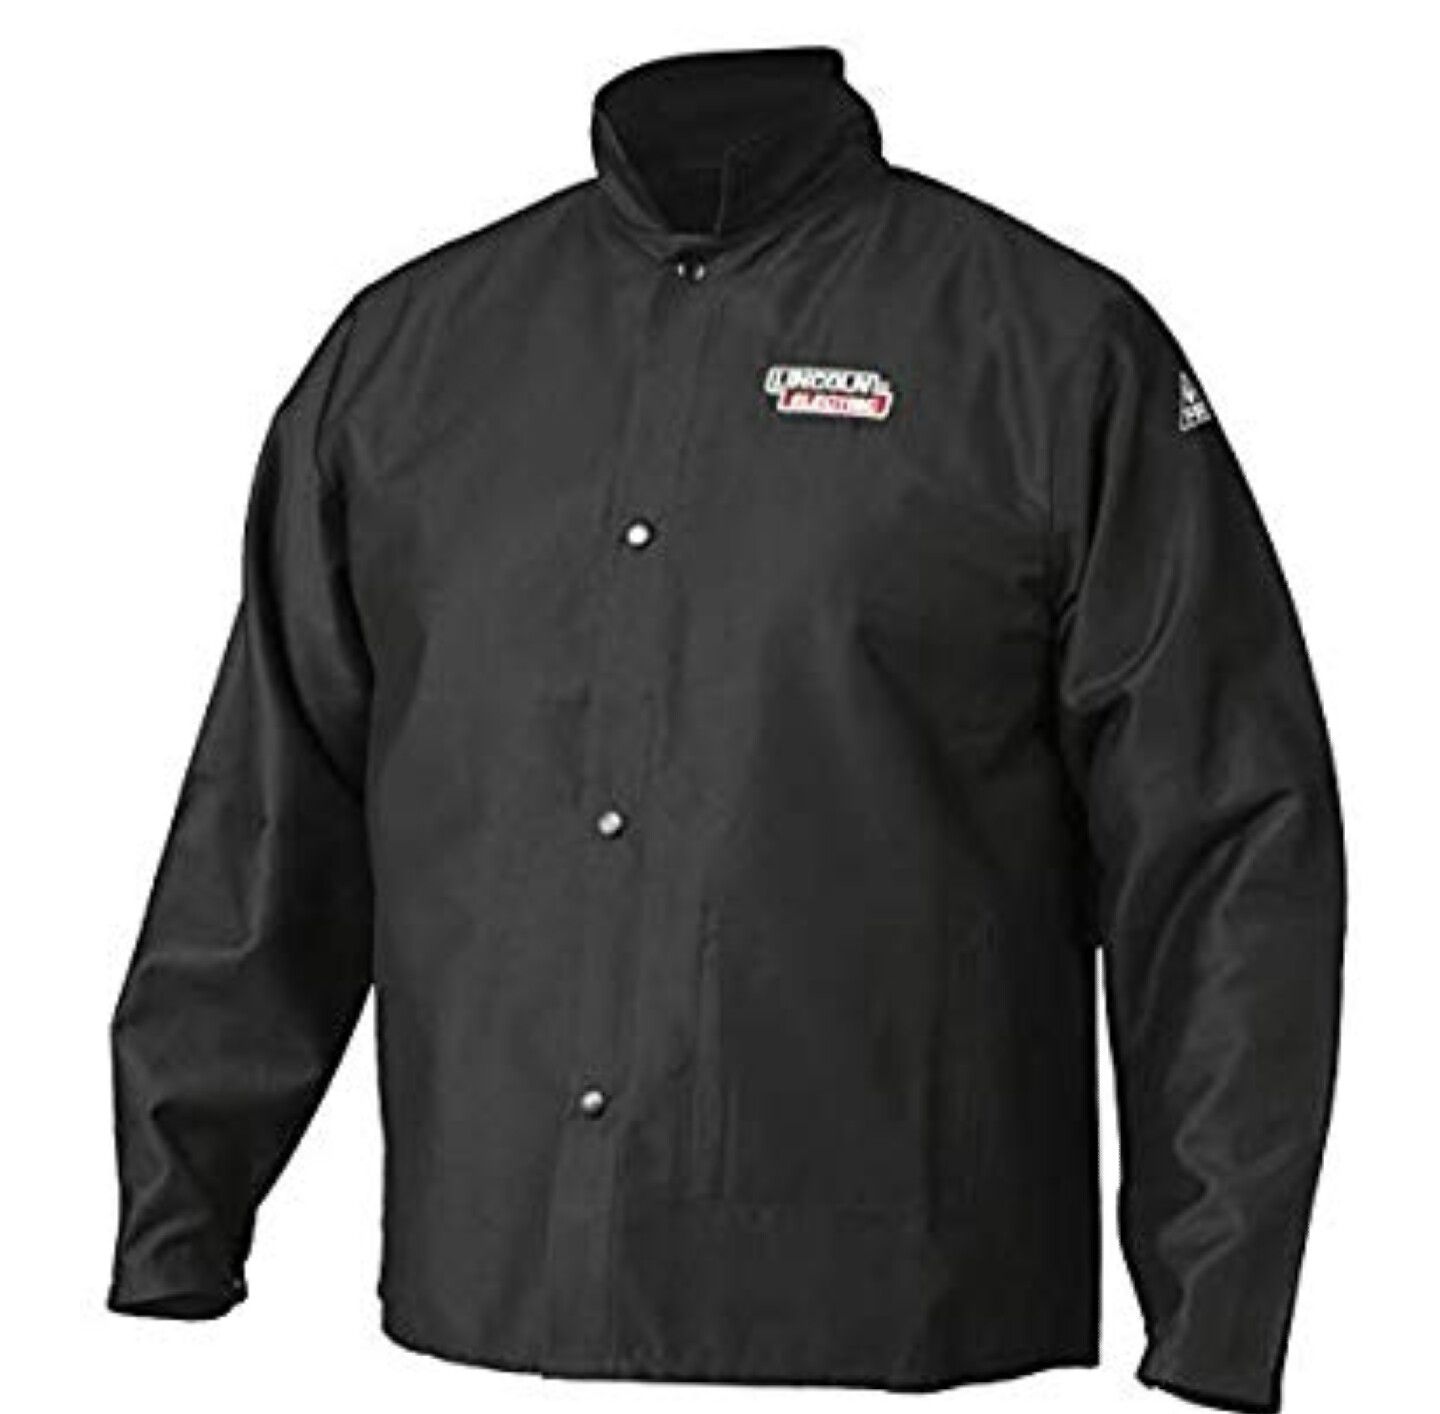 Lincoln welding jacket XXL